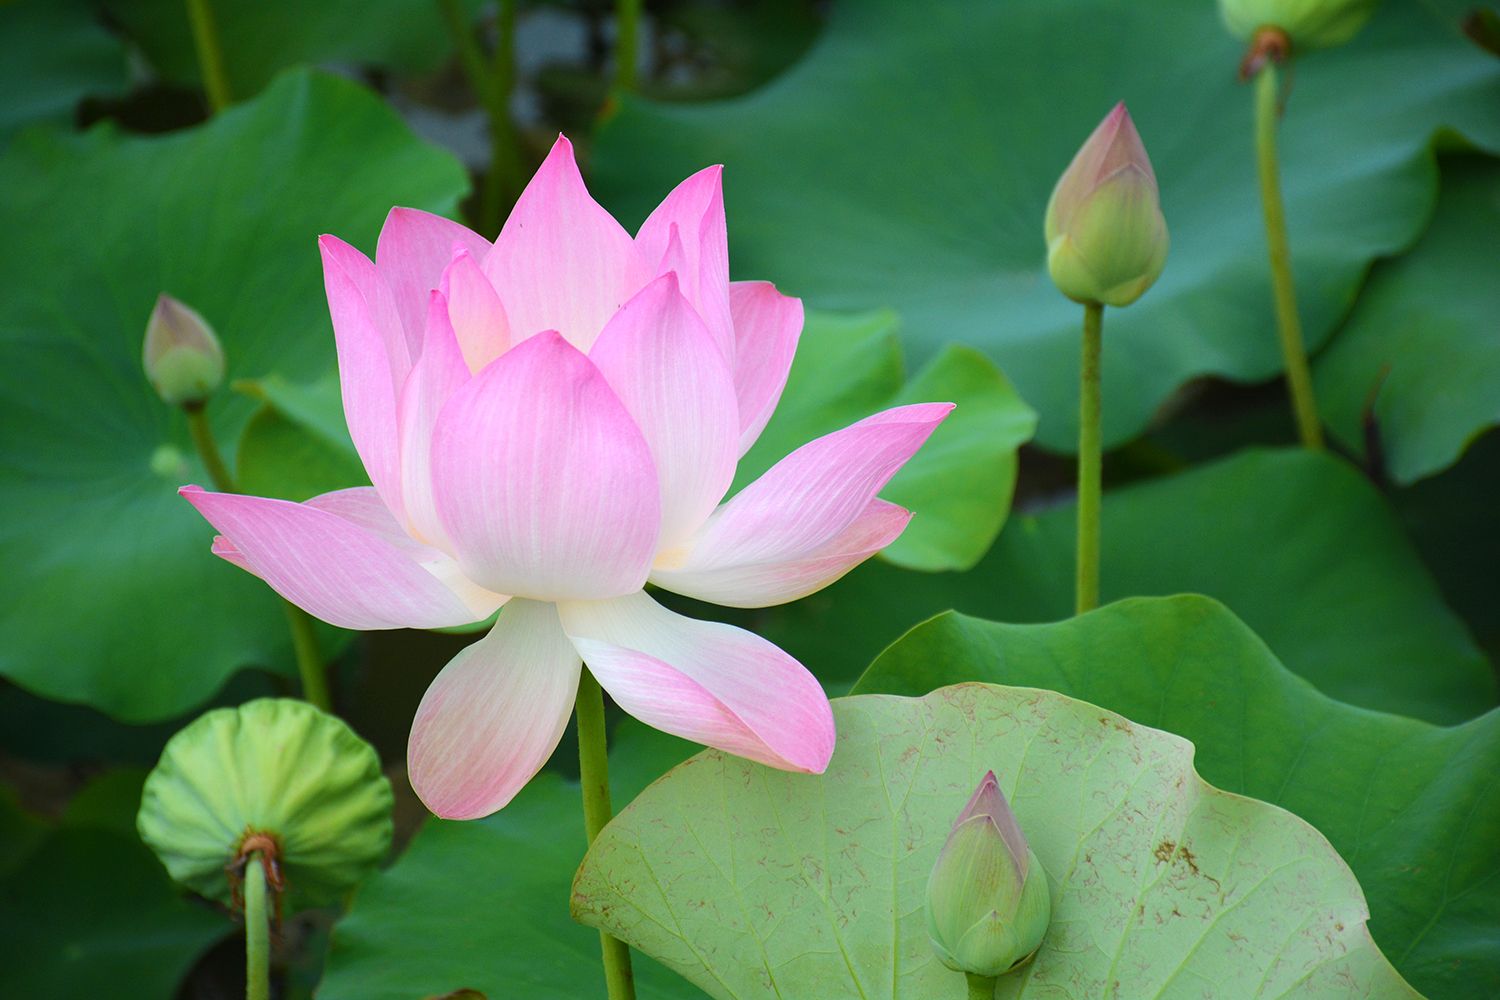 http://lucidpractice.com/wp-content/uploads/2014/07/Lotus-Flower-Cambodia.jpg